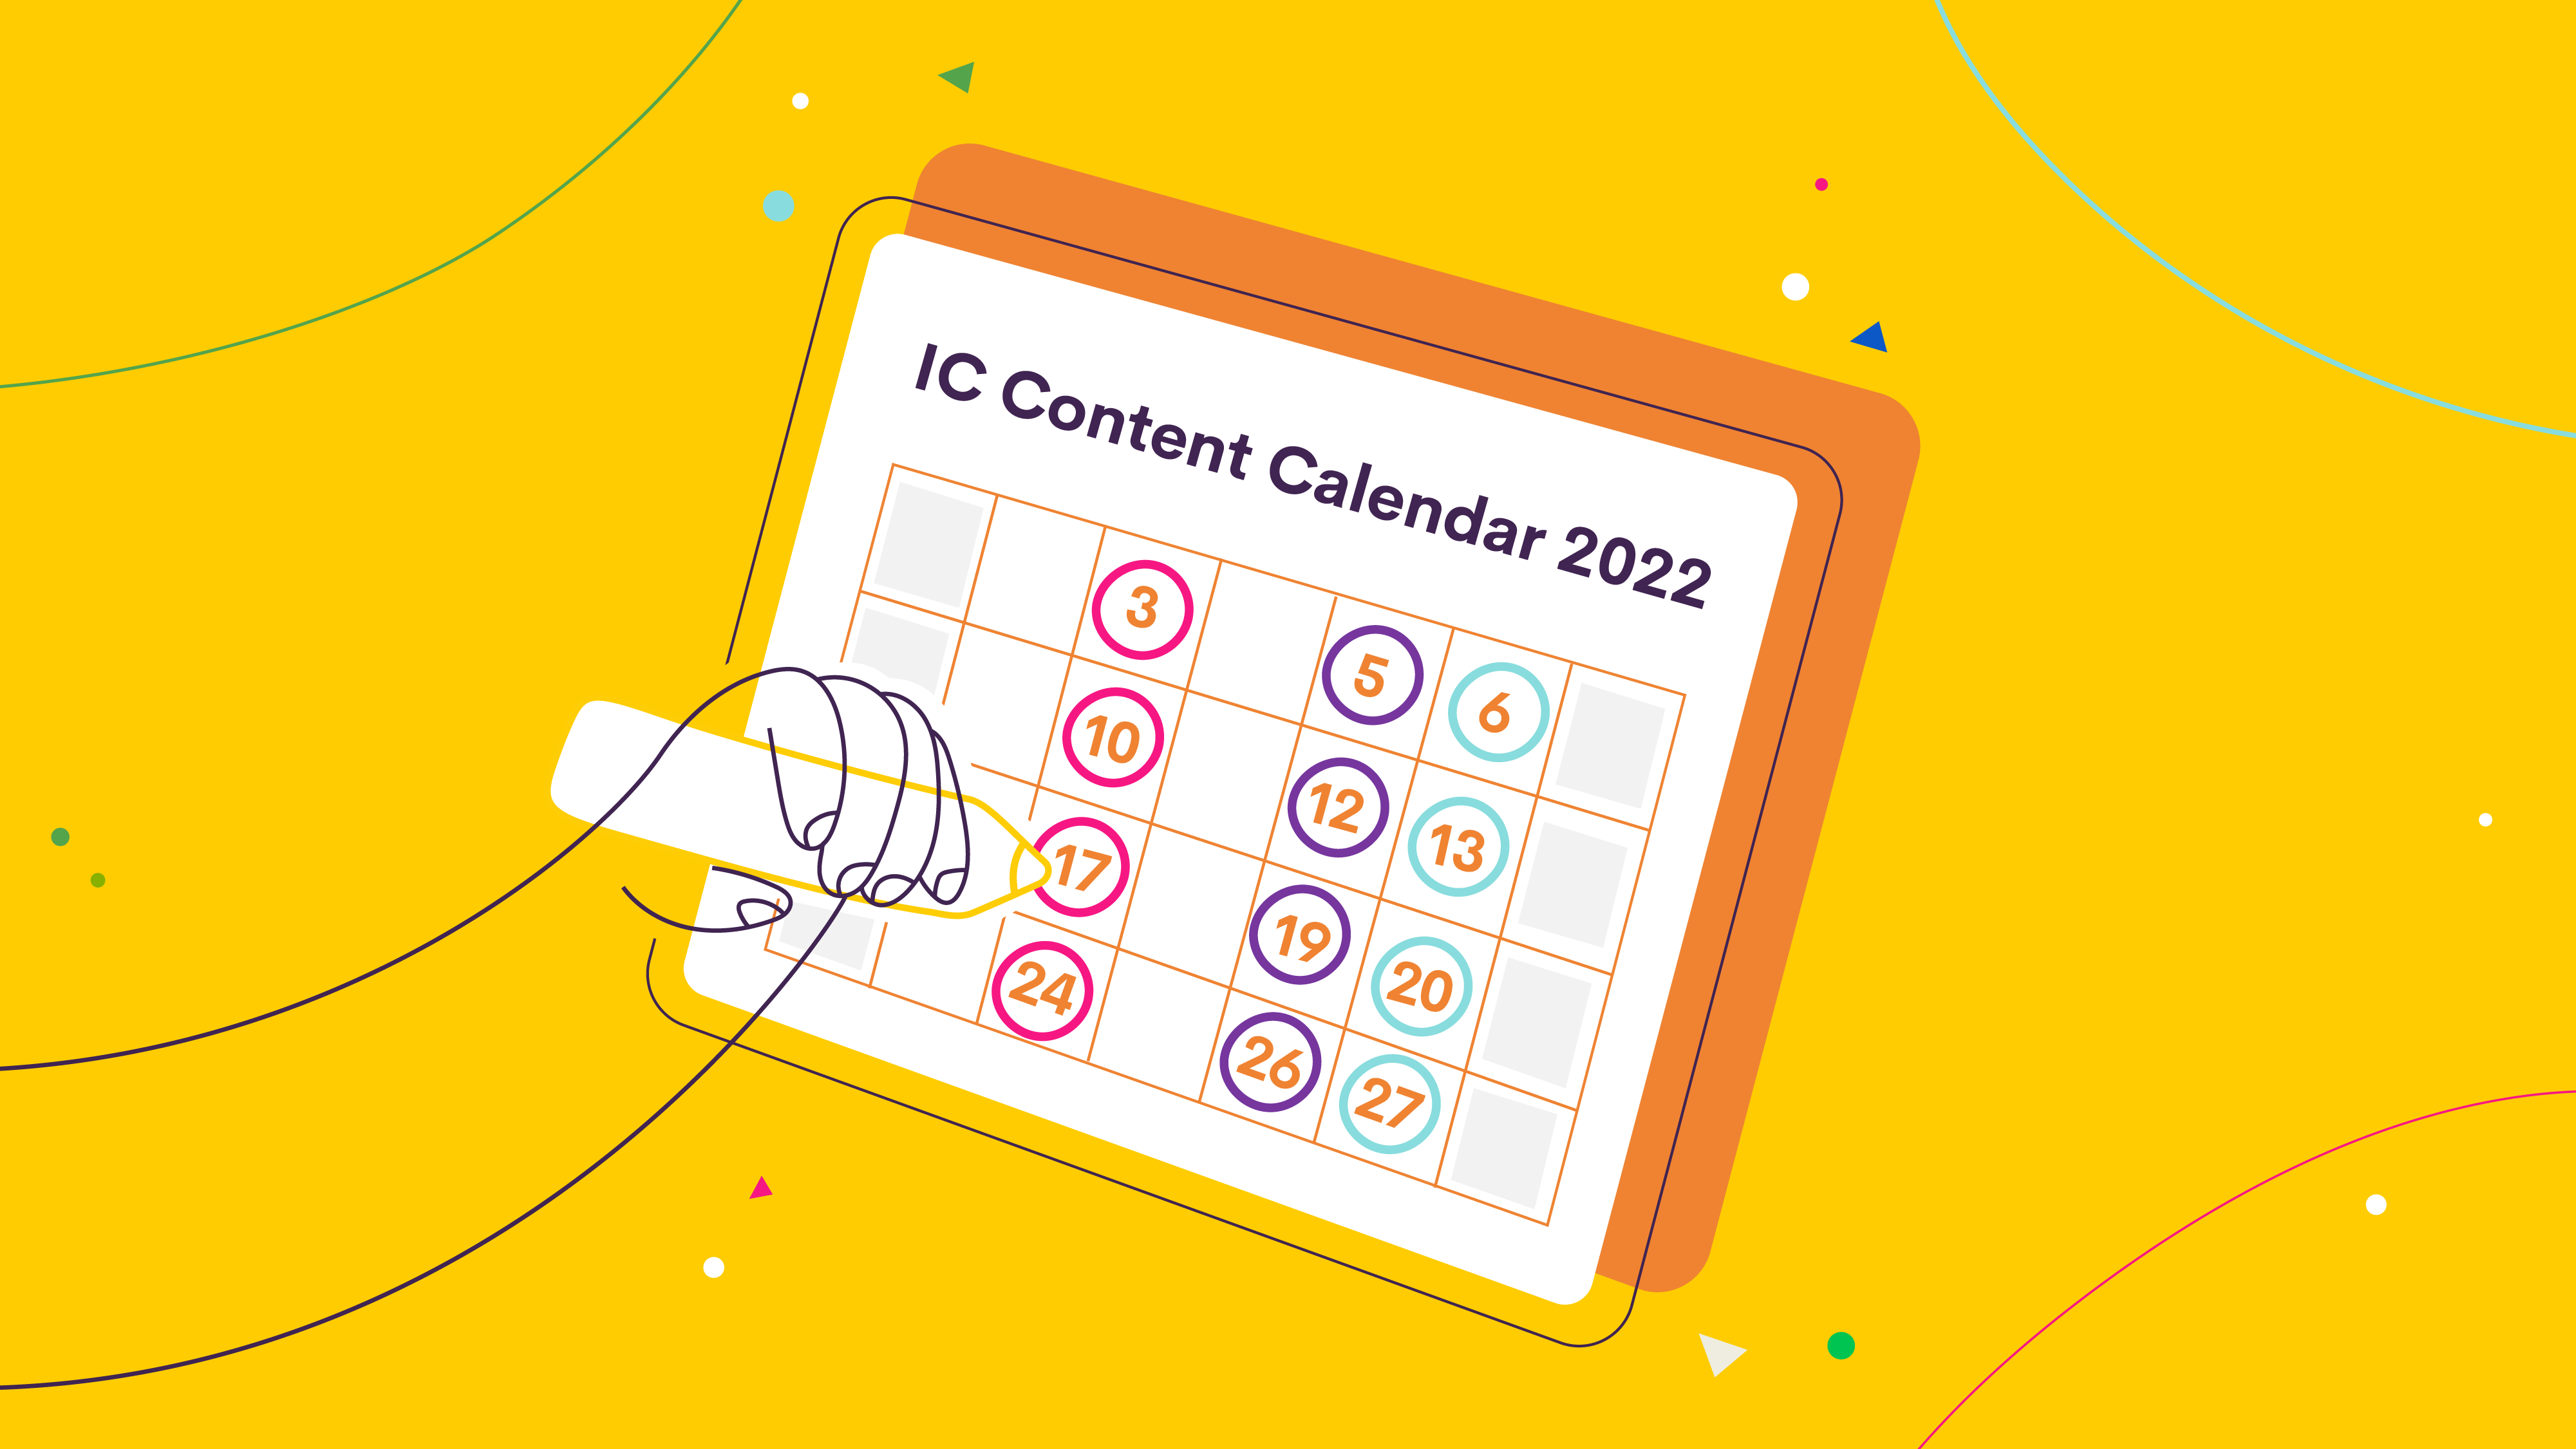 Internal Comms Content Calendar 2022 - CRO-02